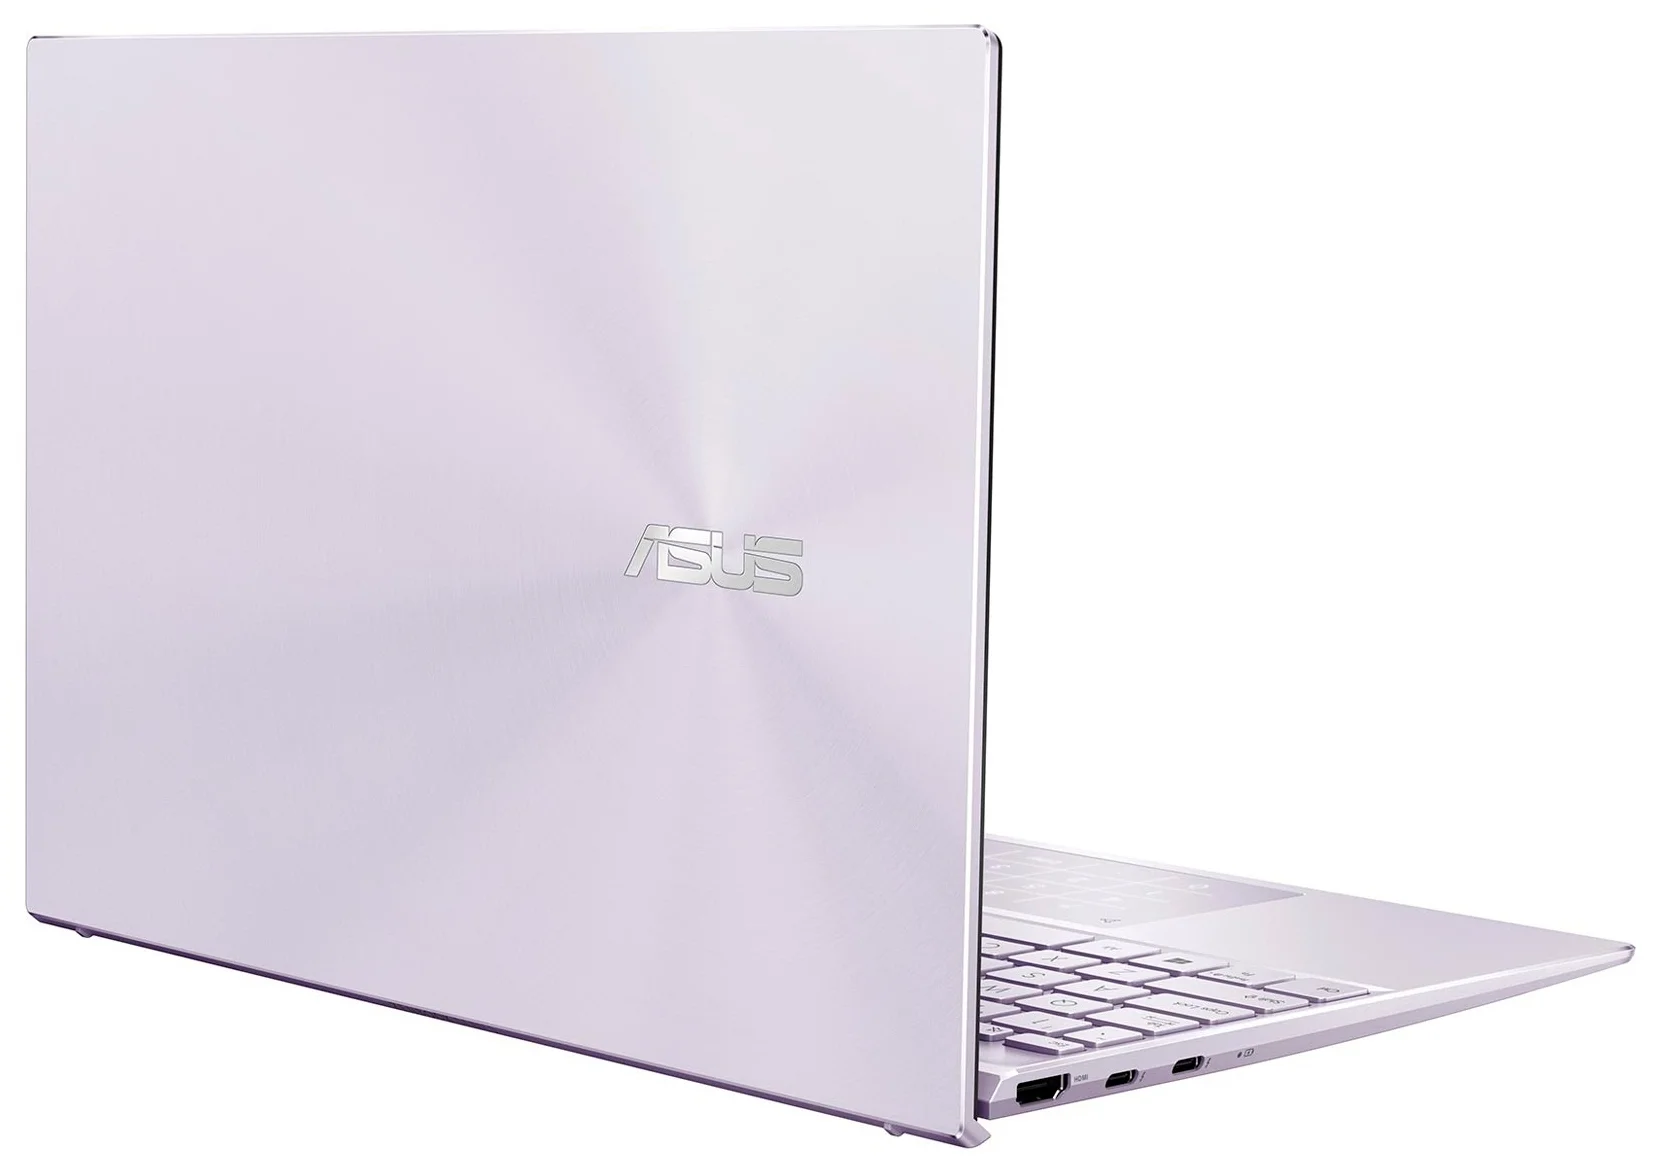 13.3" ASUS Zenbook 13 UX325EA-KG285T - разъемы: USB 3.2 Gen1 Type A, выход HDMI, микрофон/наушники Combo, Thunderbolt 4 x 2